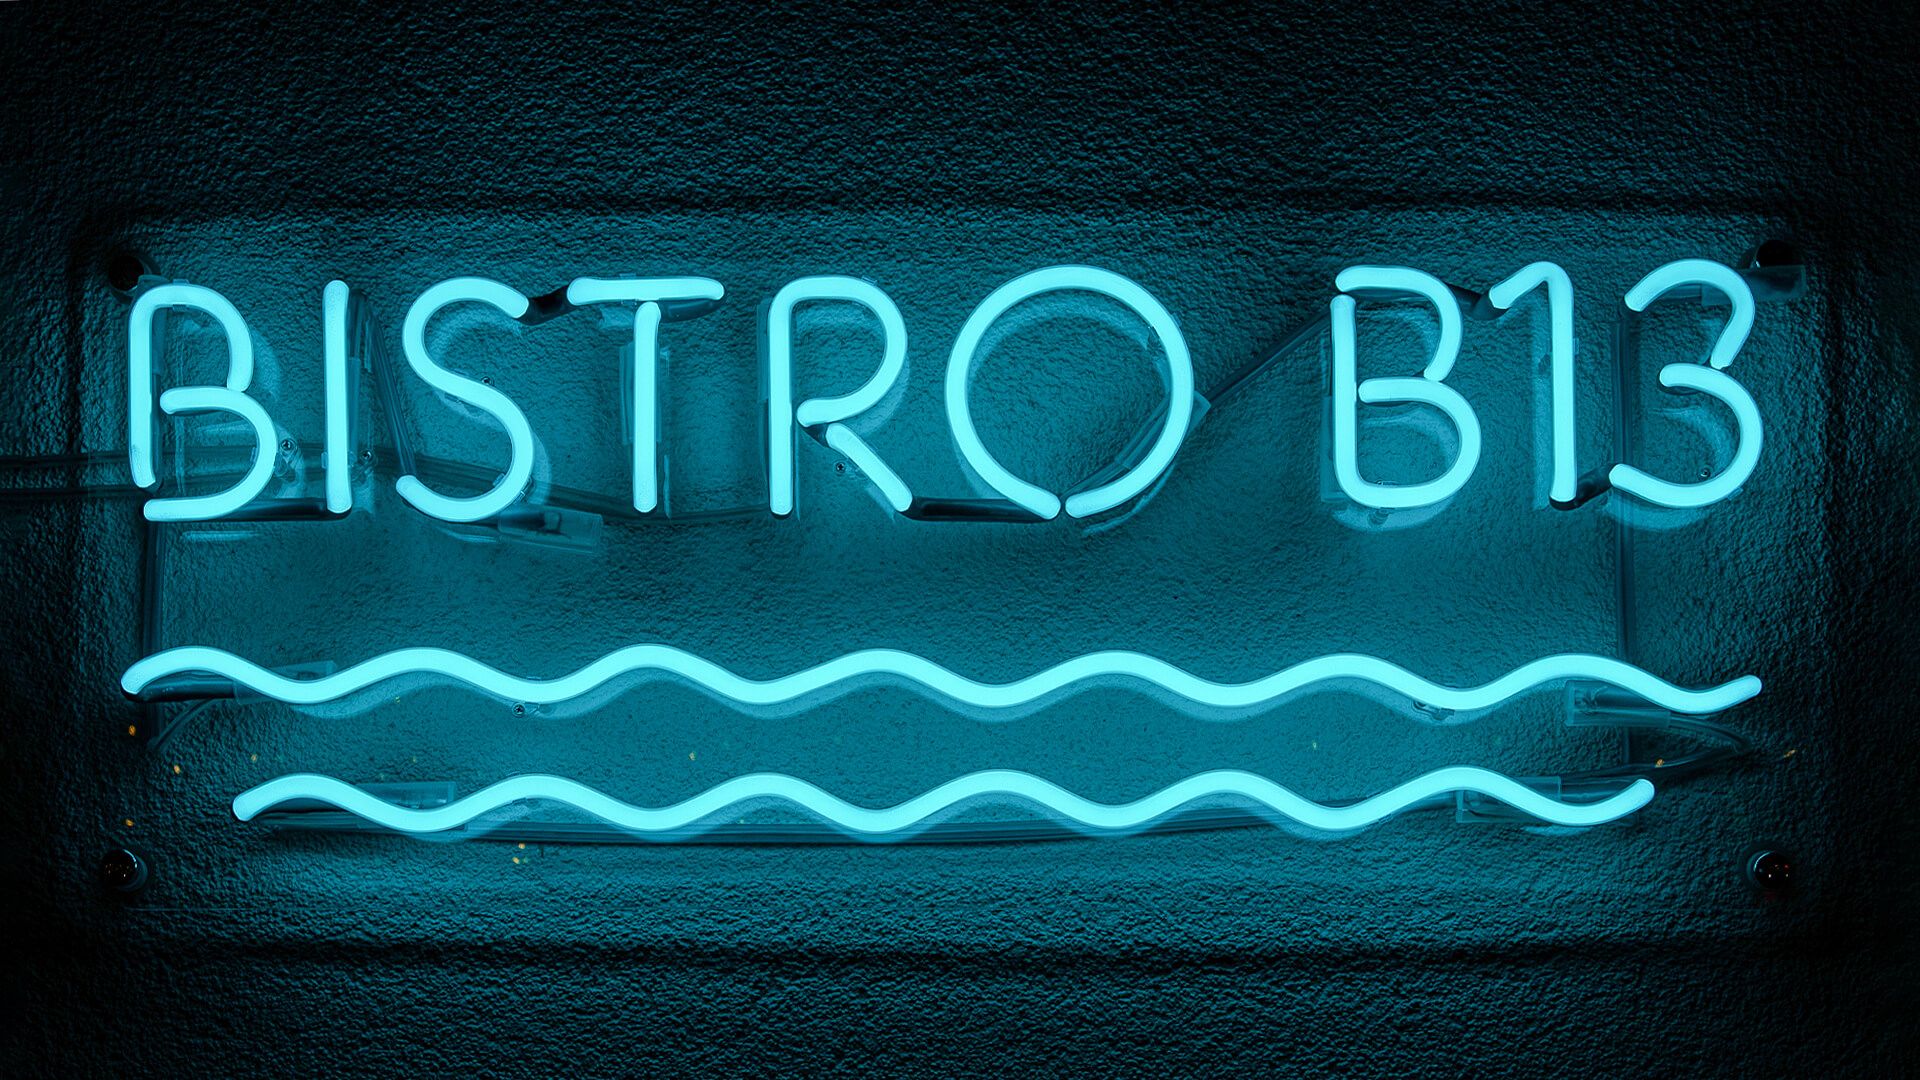 Bistro B13 - Bistro verre néon turquoise.